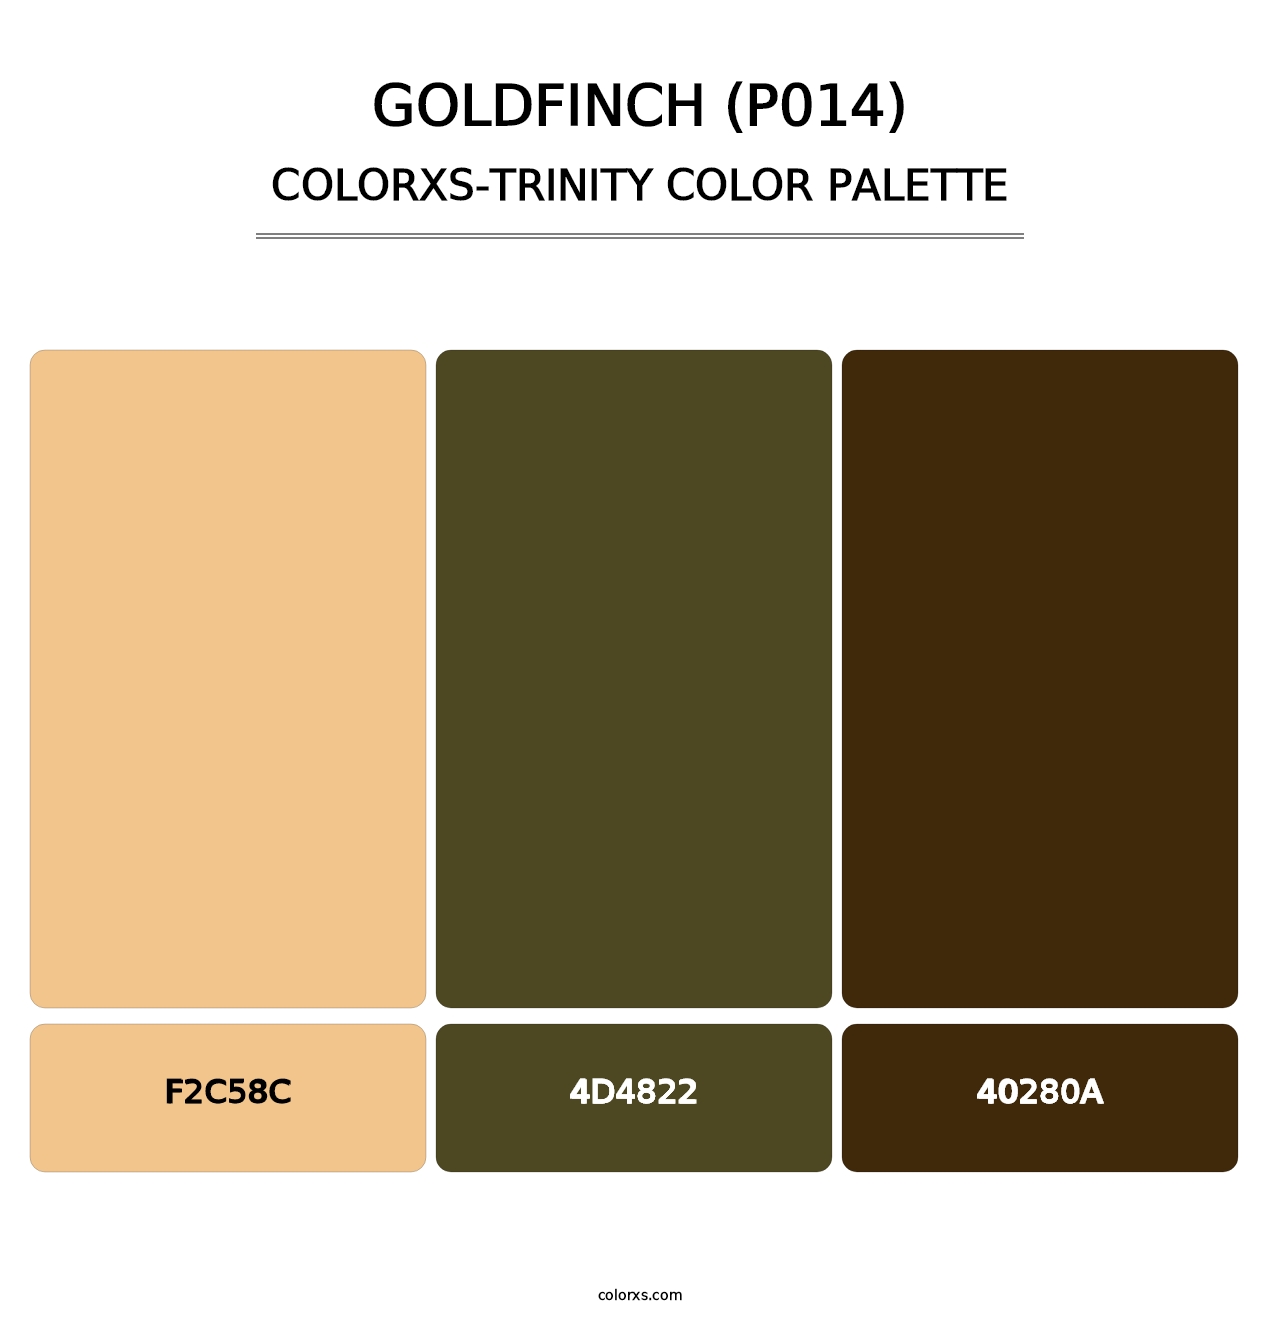 Goldfinch (P014) - Colorxs Trinity Palette